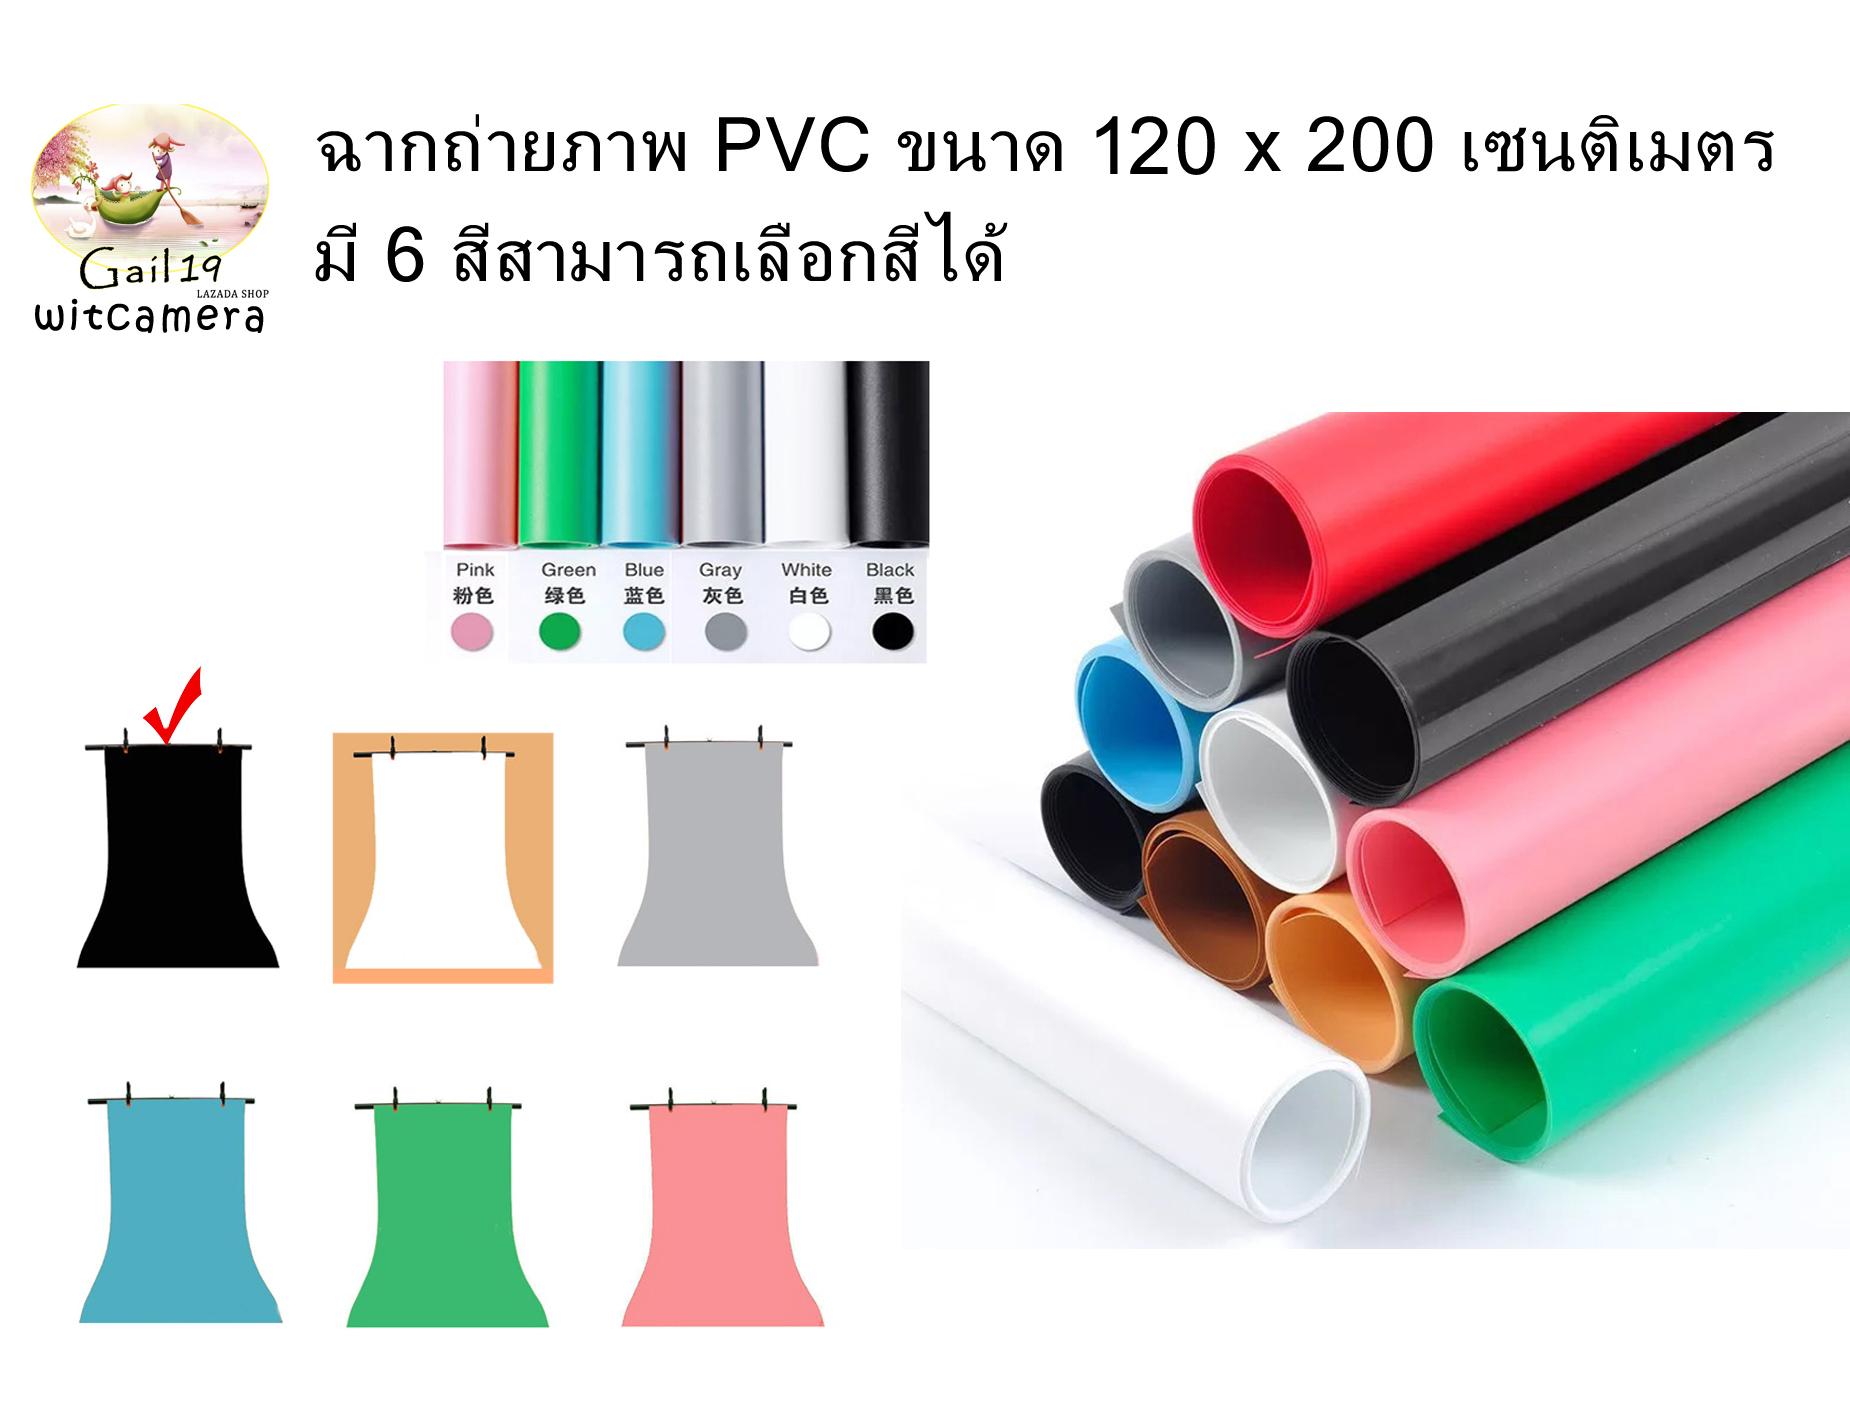 PVC photo studio backdrop 120 x 200cm with 6 colors for choosing ฉากถ่ายภาพ PVC ขนาด 120 x 200 เซนติเมตร มี 6 สีสามารถเลือกสีได้